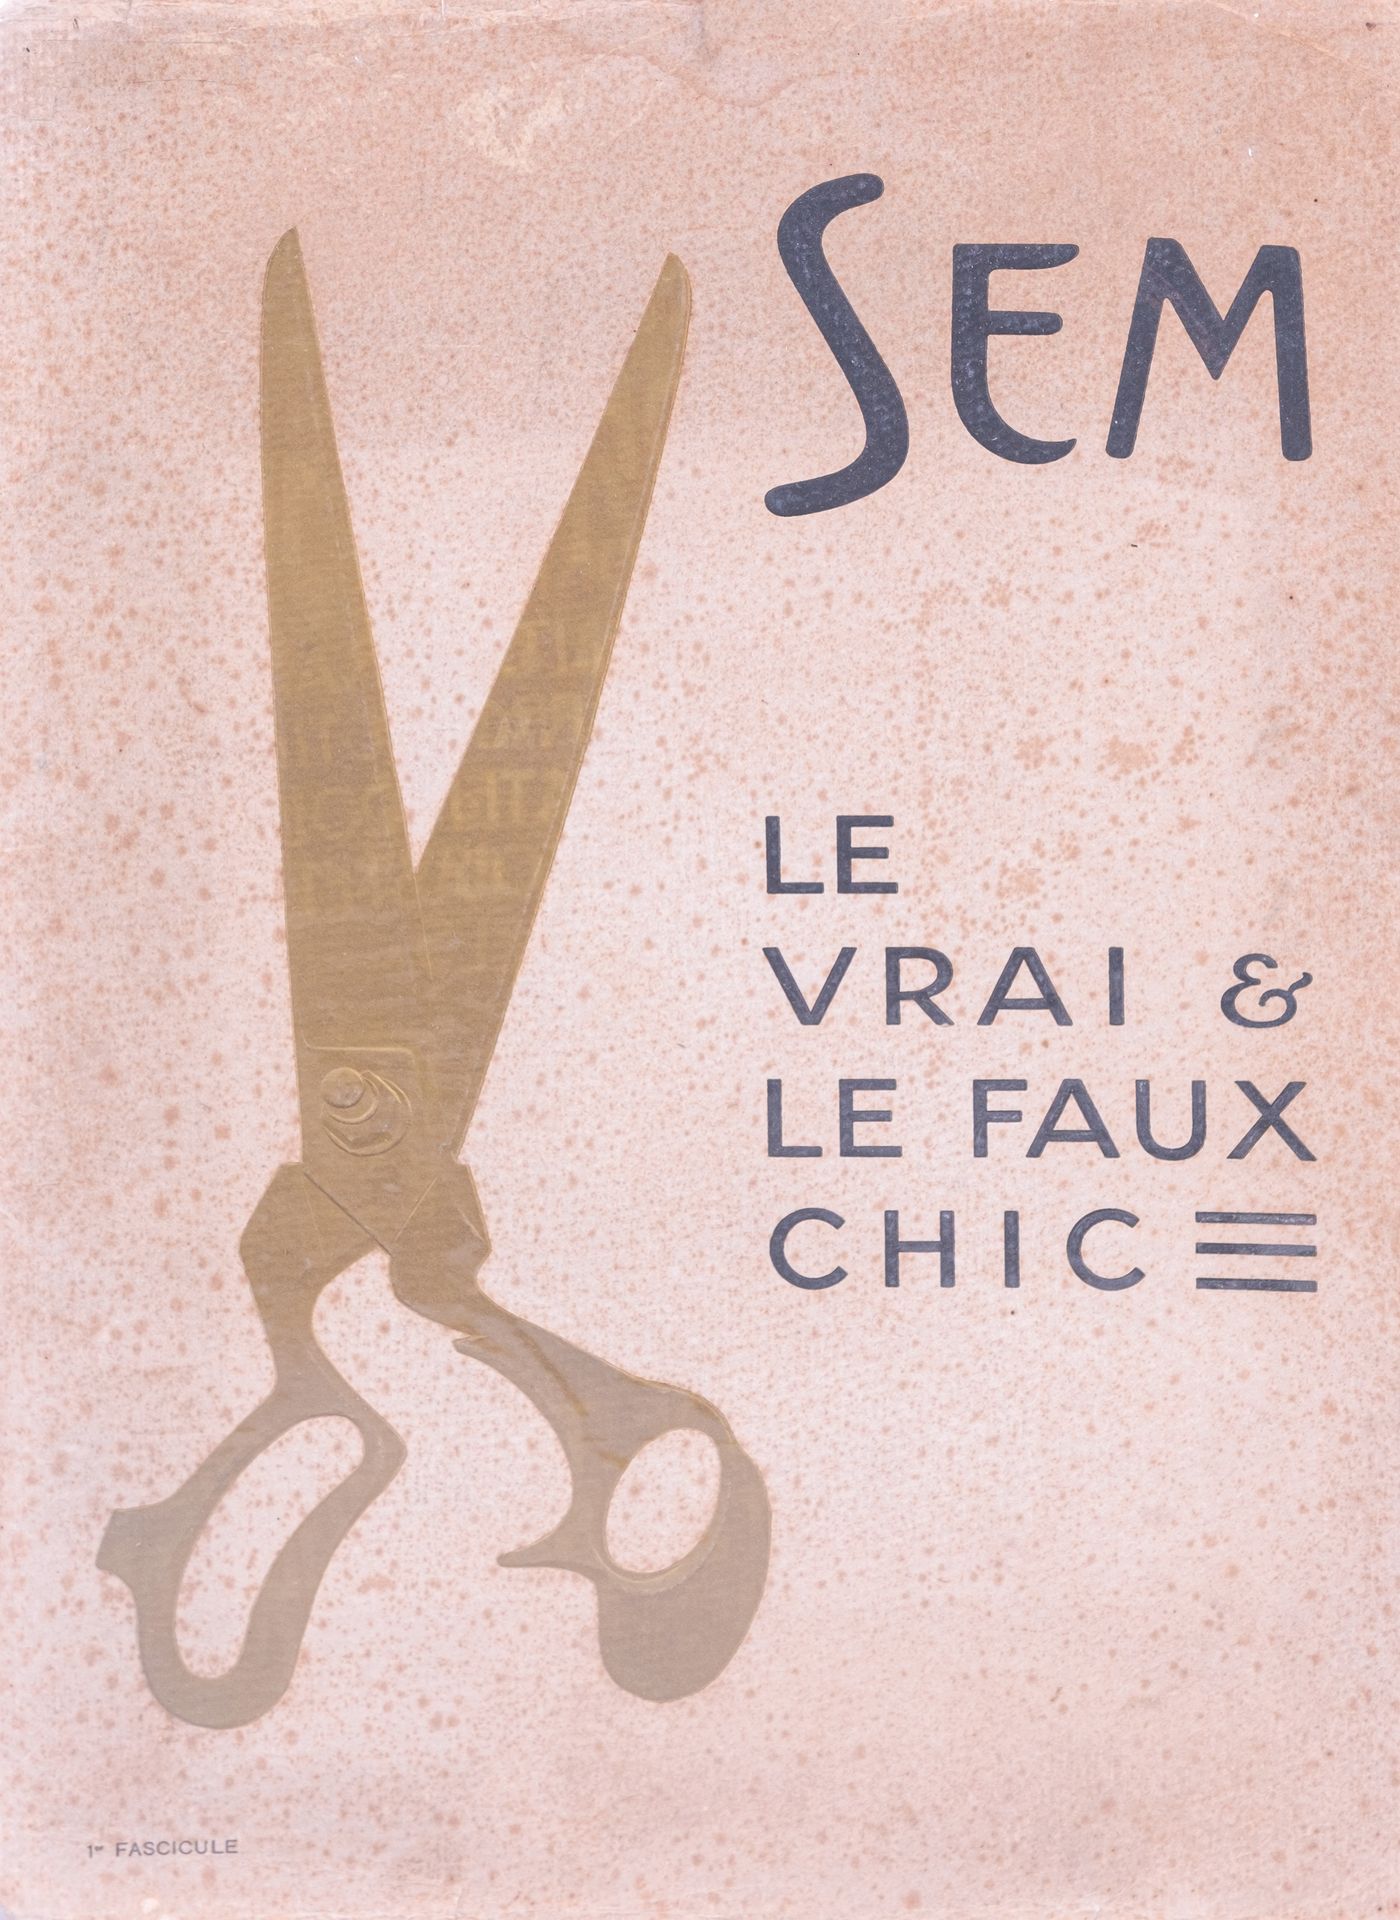 Null SEM (Georges GOURSAT)

"Le Vrai Le faux Chic "第一期 - 巴黎 1914年

袖珍平装本。封面插图是一把&hellip;